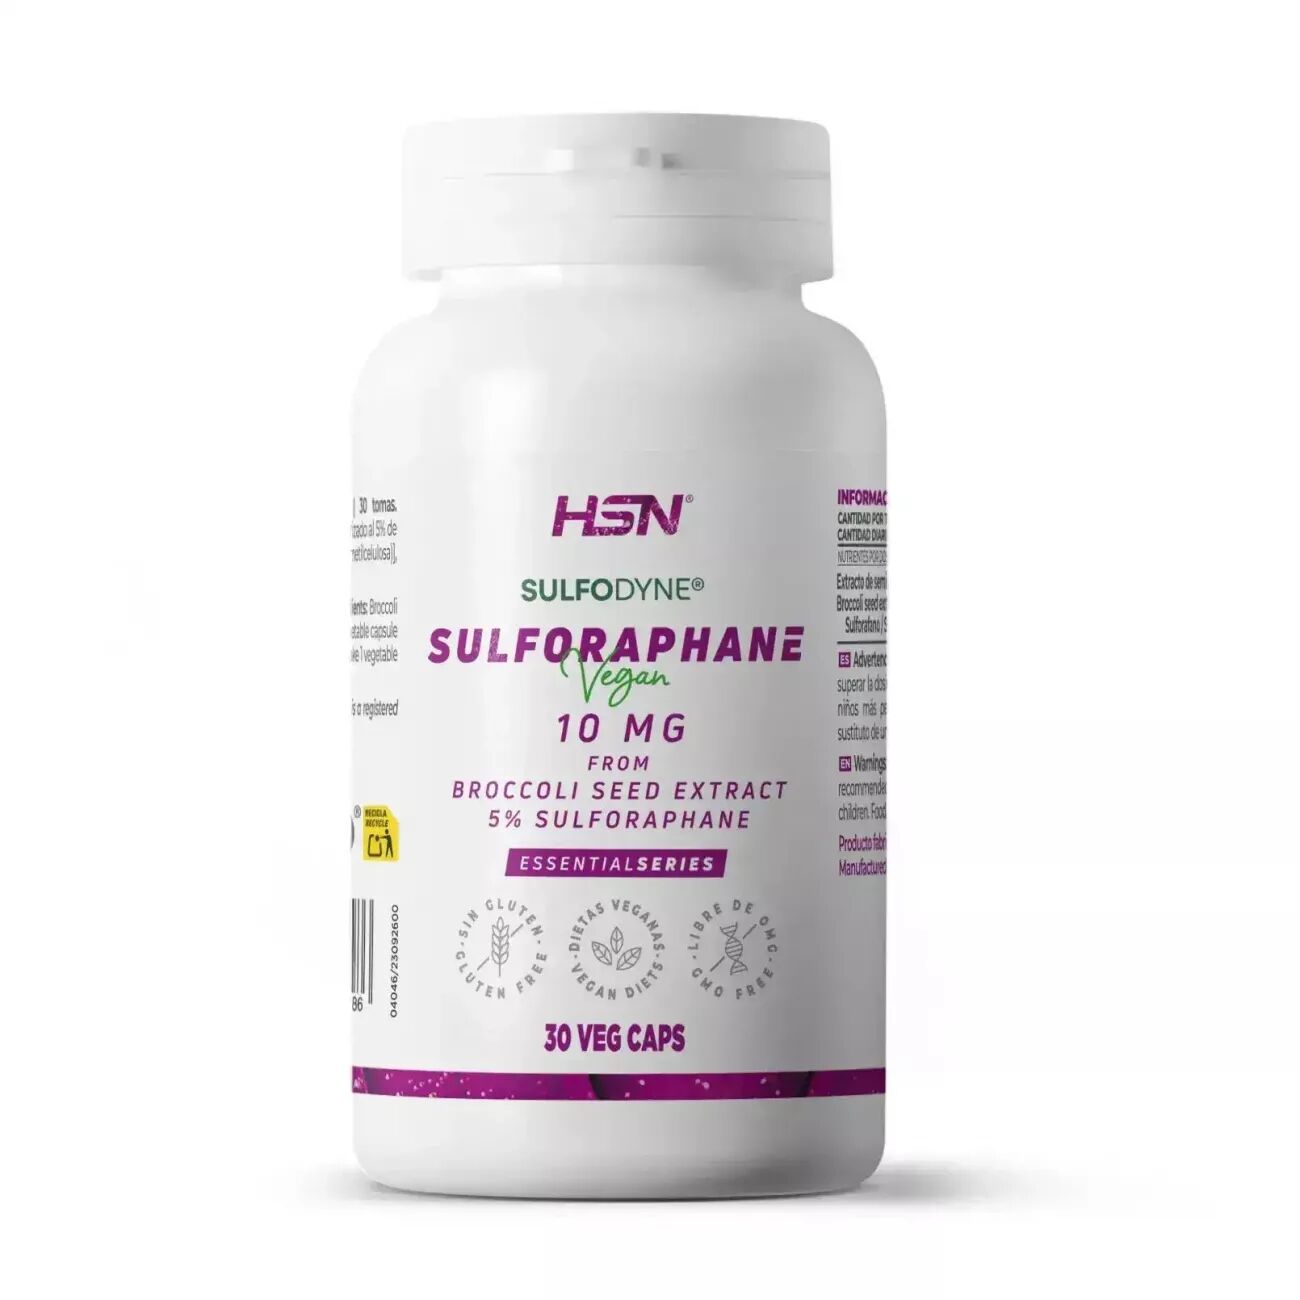 HSN Sulforafano de brócoli 10mg (200mg sulfodyne®) - 30 veg caps